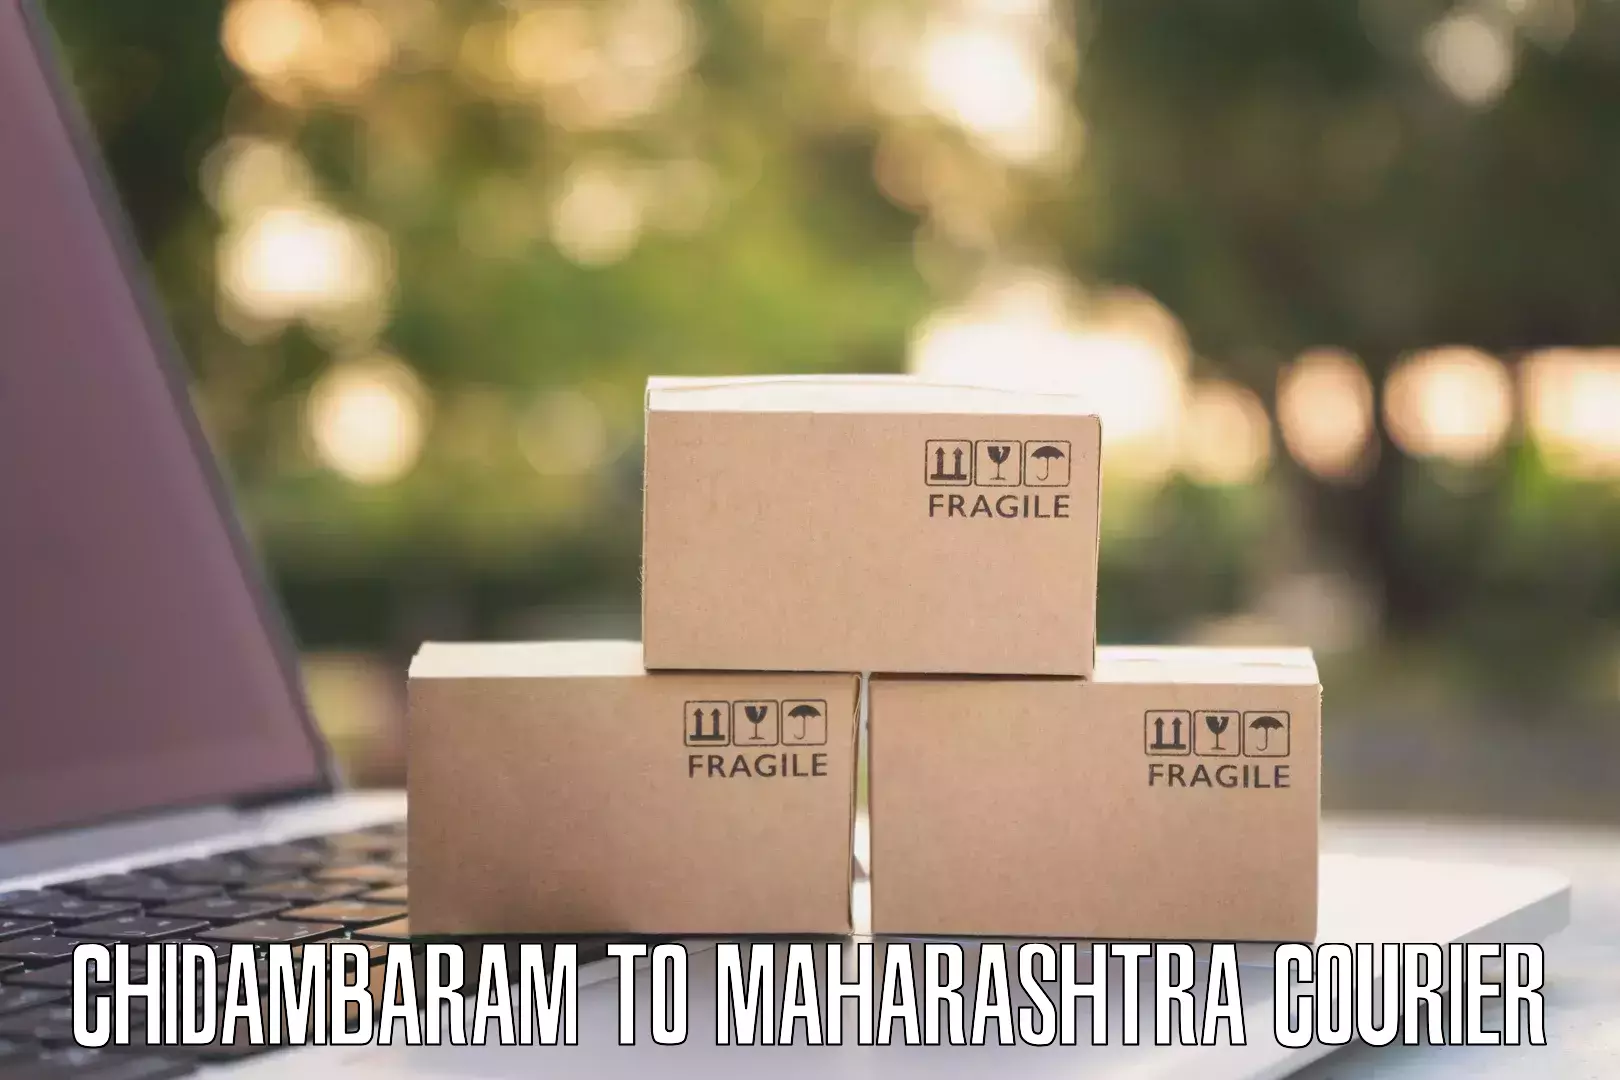 Nationwide delivery network Chidambaram to Shringartali